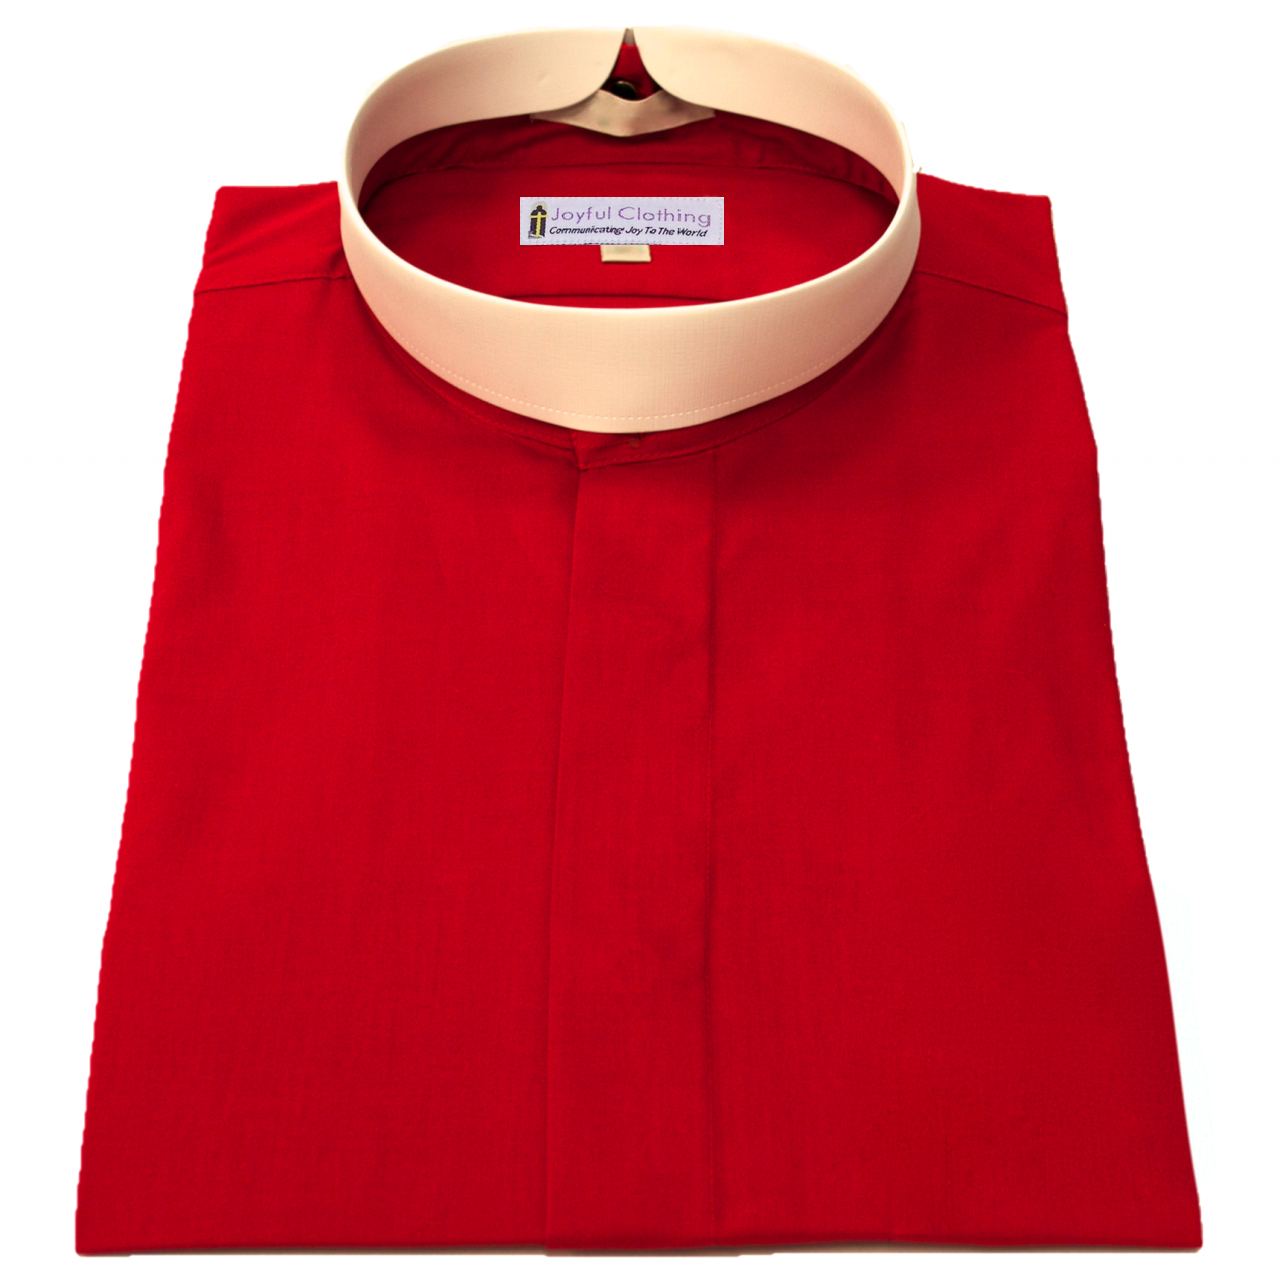 657. Women's Short-Sleeve (Banded) Full-Collar Clergy Shirt - Red